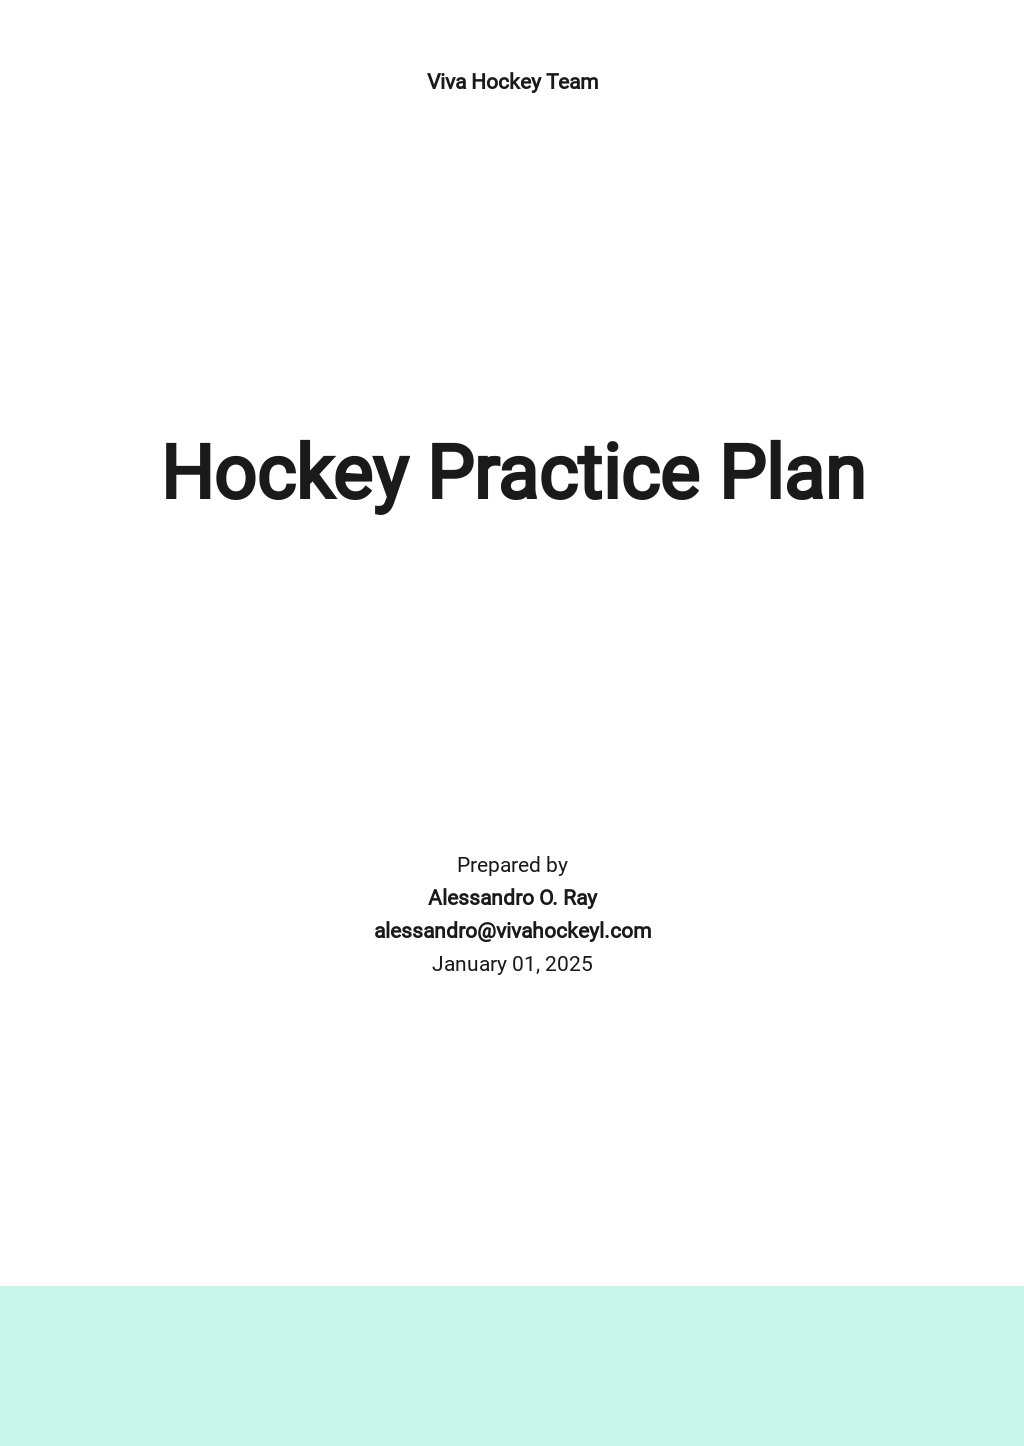 Hockey Practice Plan Template Template net